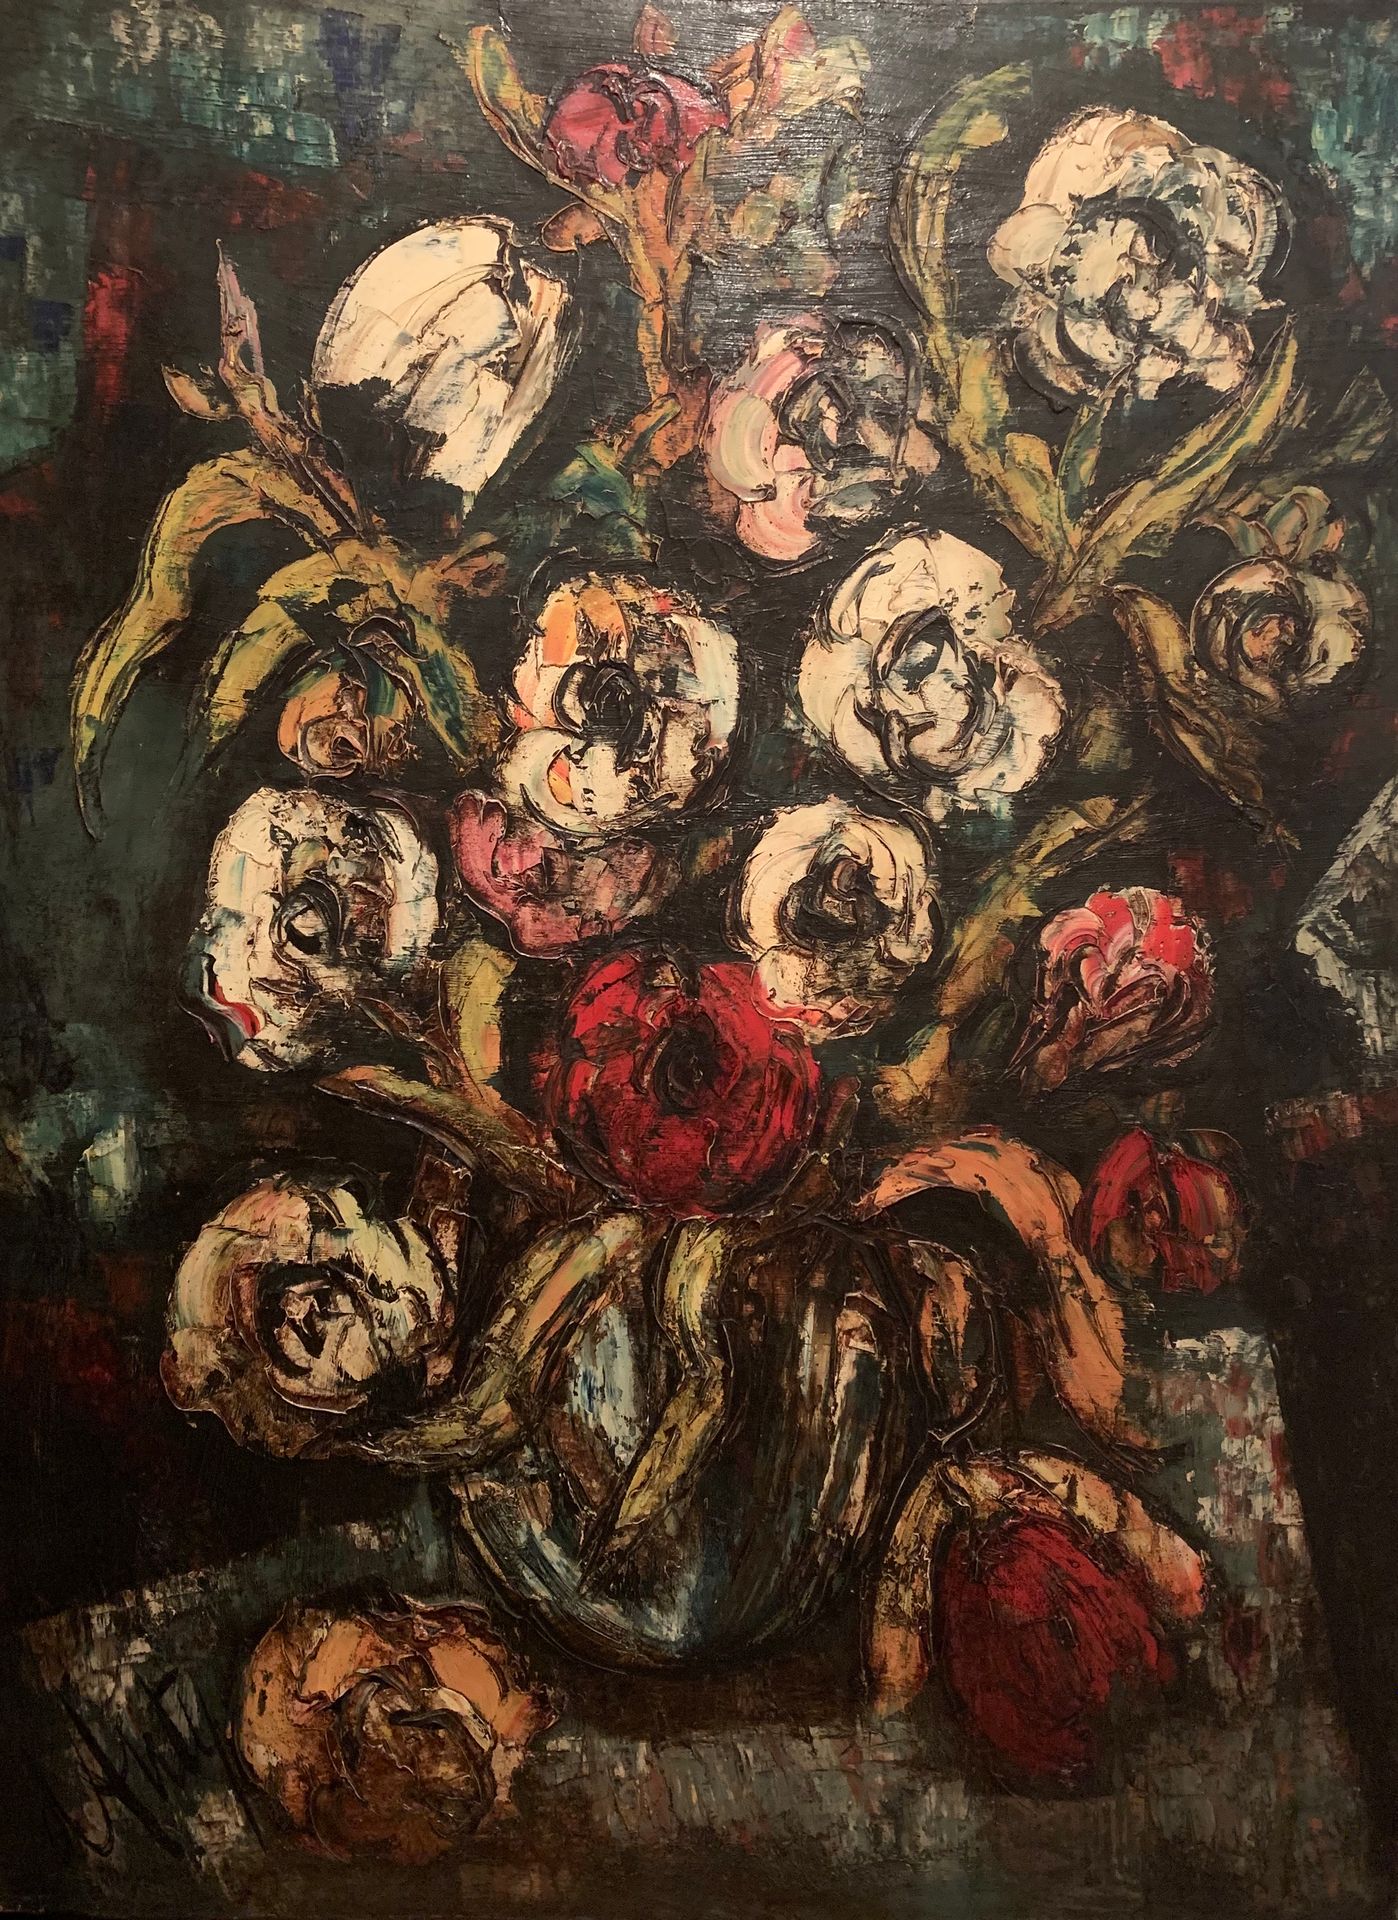 Null 亨利-莫里斯-丹提(Henry Maurice D'ANTY) (1910-1998)

一束花

布面油画，右下角有签名

117 x 90 cm